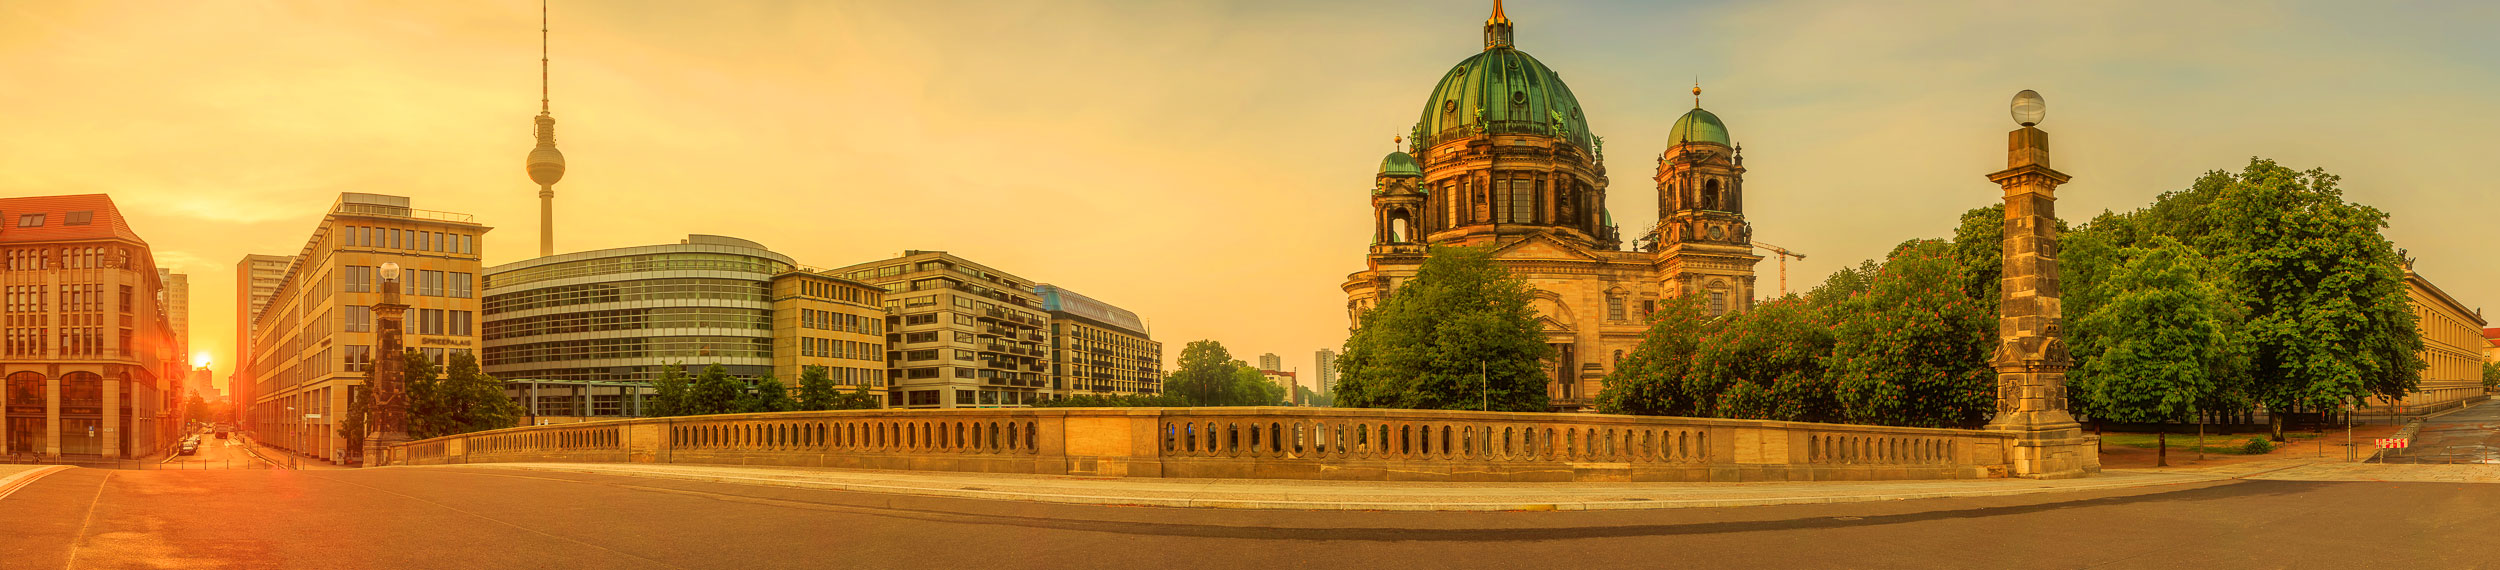 View of Berlin Cathedral, Berliner Dom in Berlin, Germany. 